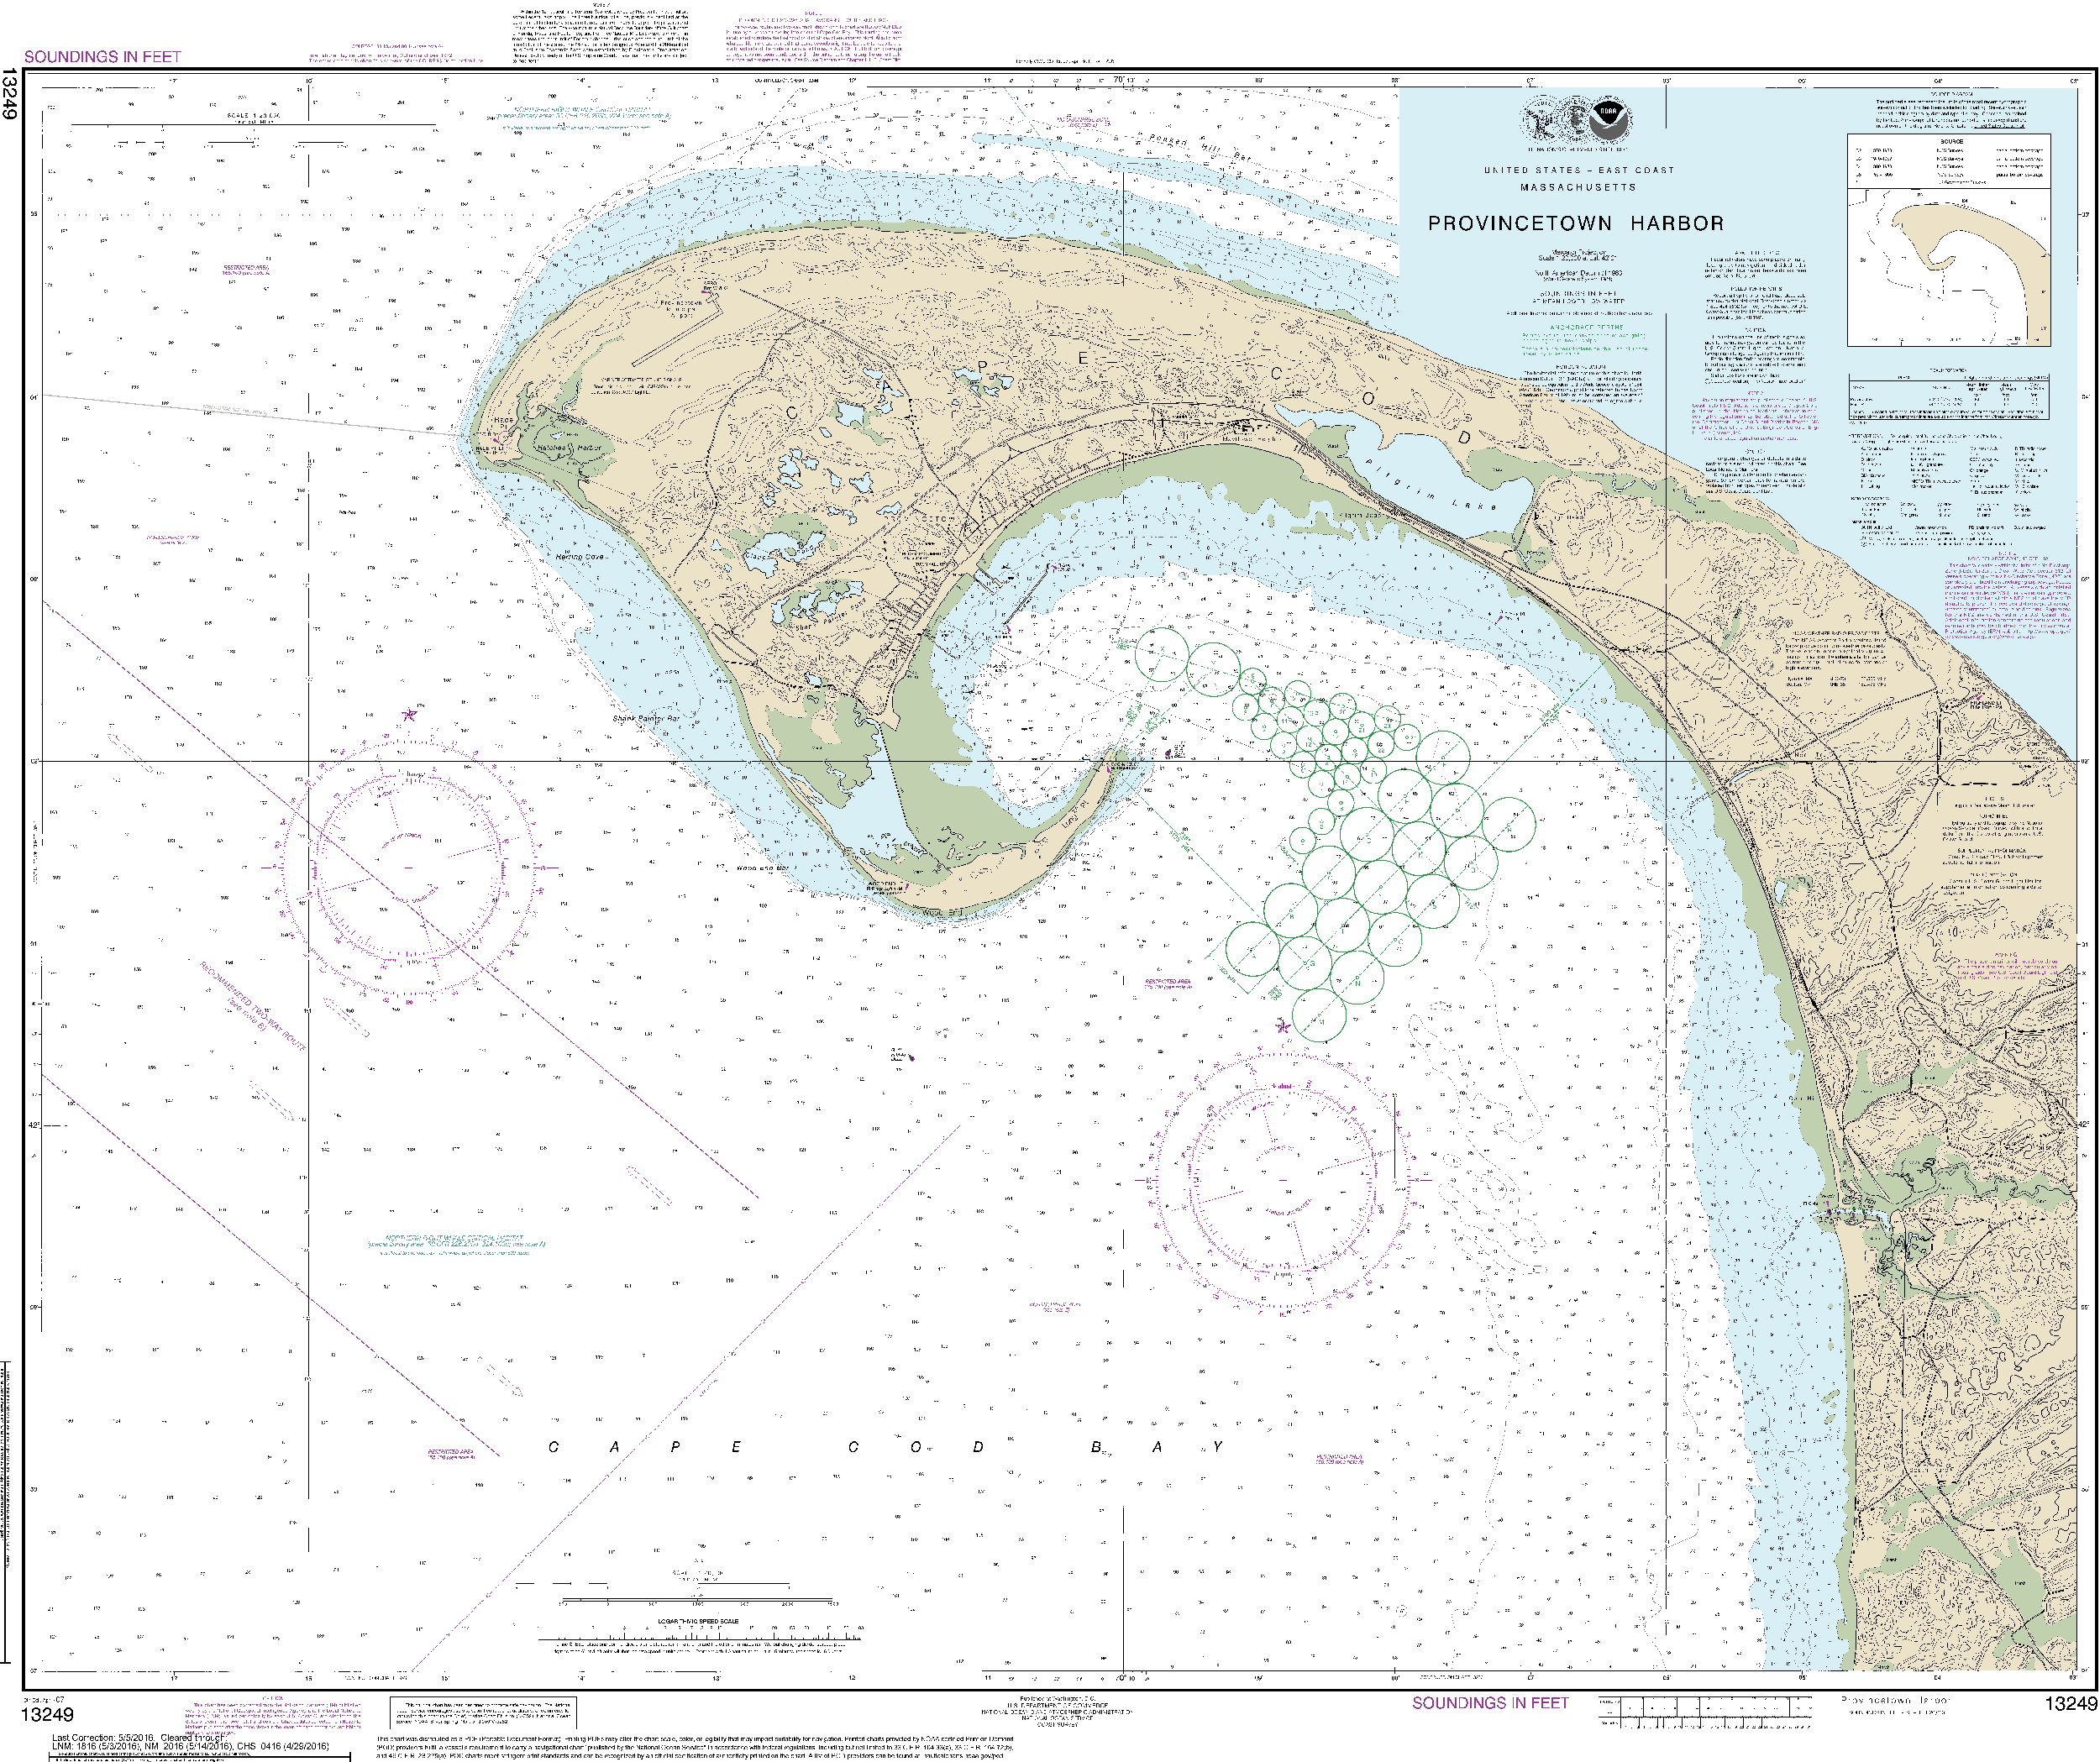 NOAA Nautical Chart 13249: Provincetown Harbor